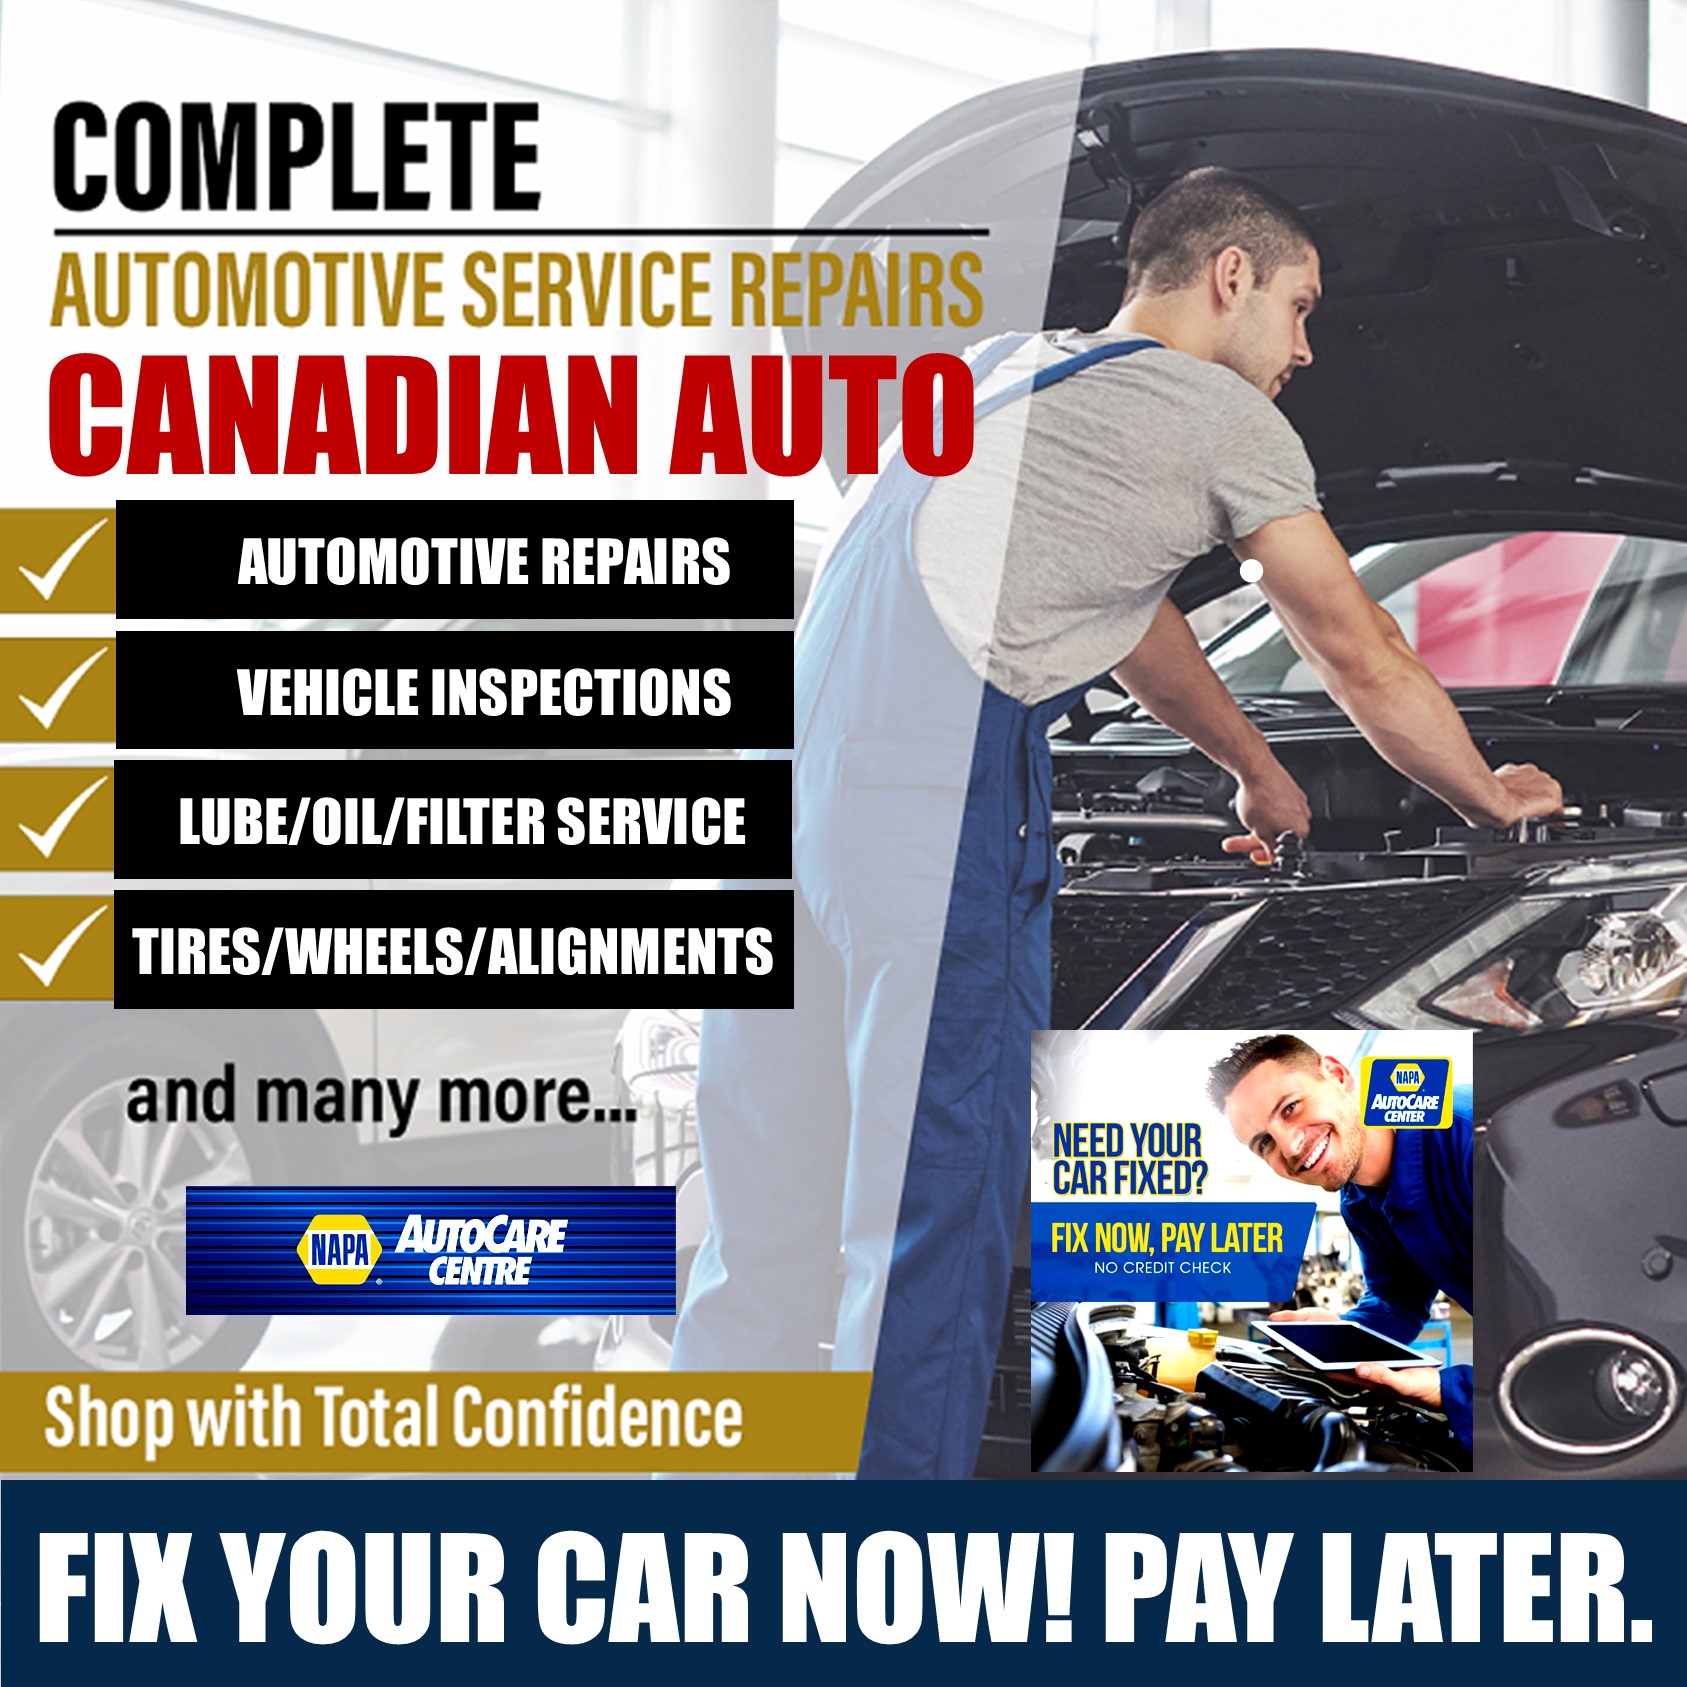 Complete Automotive Service Repairs